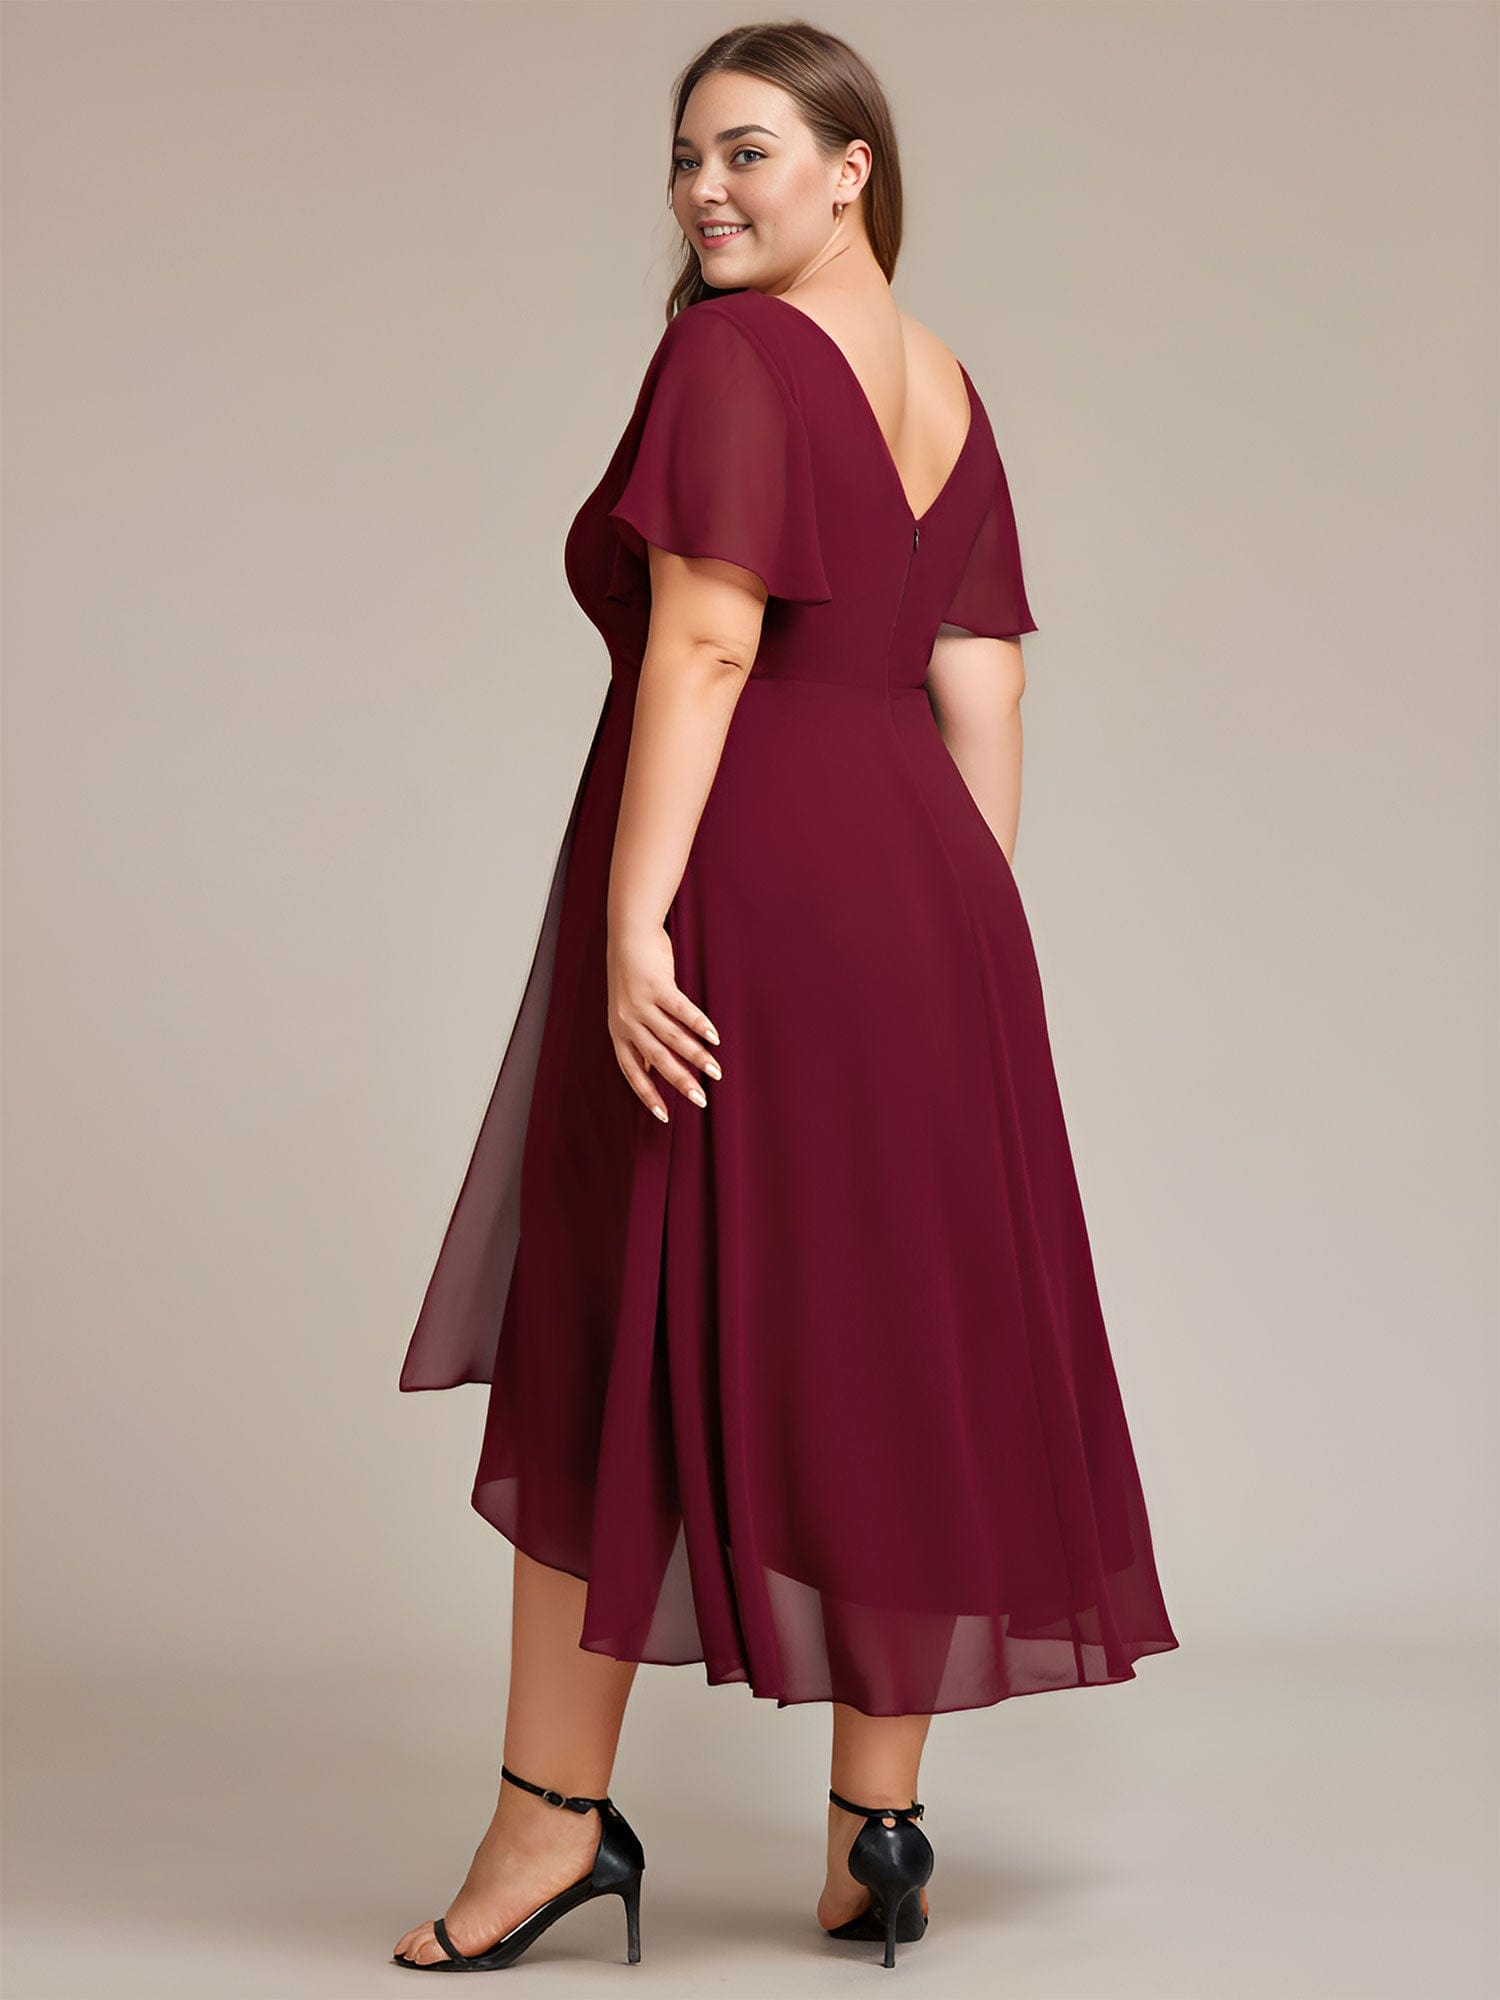 Plus Size Flowing Chiffon V-Neck Ruffle Sleeves Bridesmaid Dress  #color_Burgundy